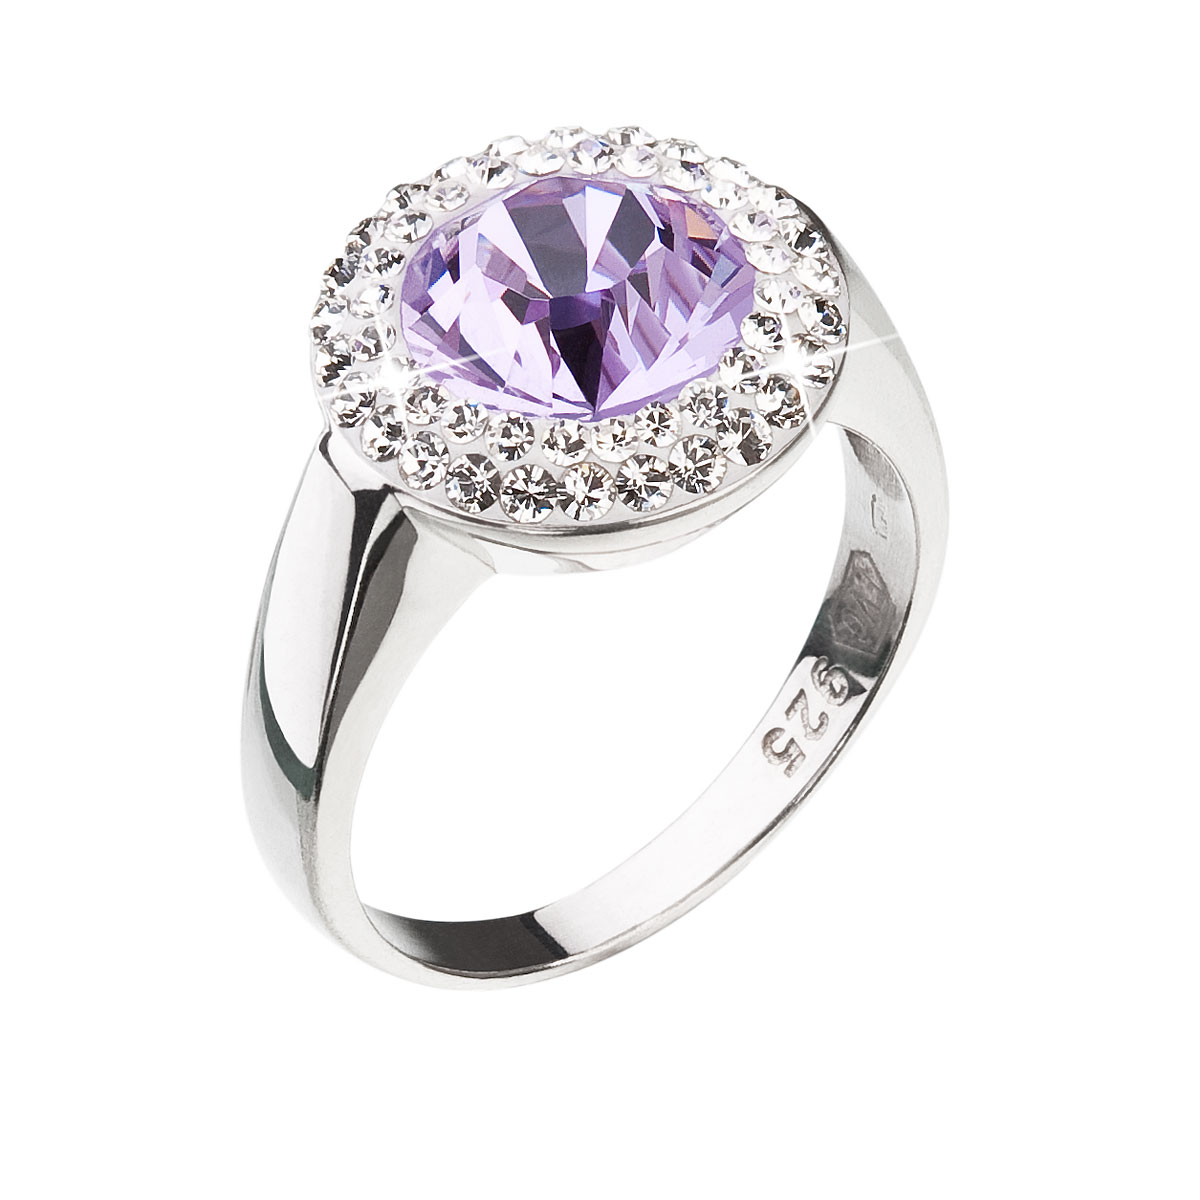 Evolution Group Stříbrný prsten s krystaly Swarovski fialový kulatý 35026.3